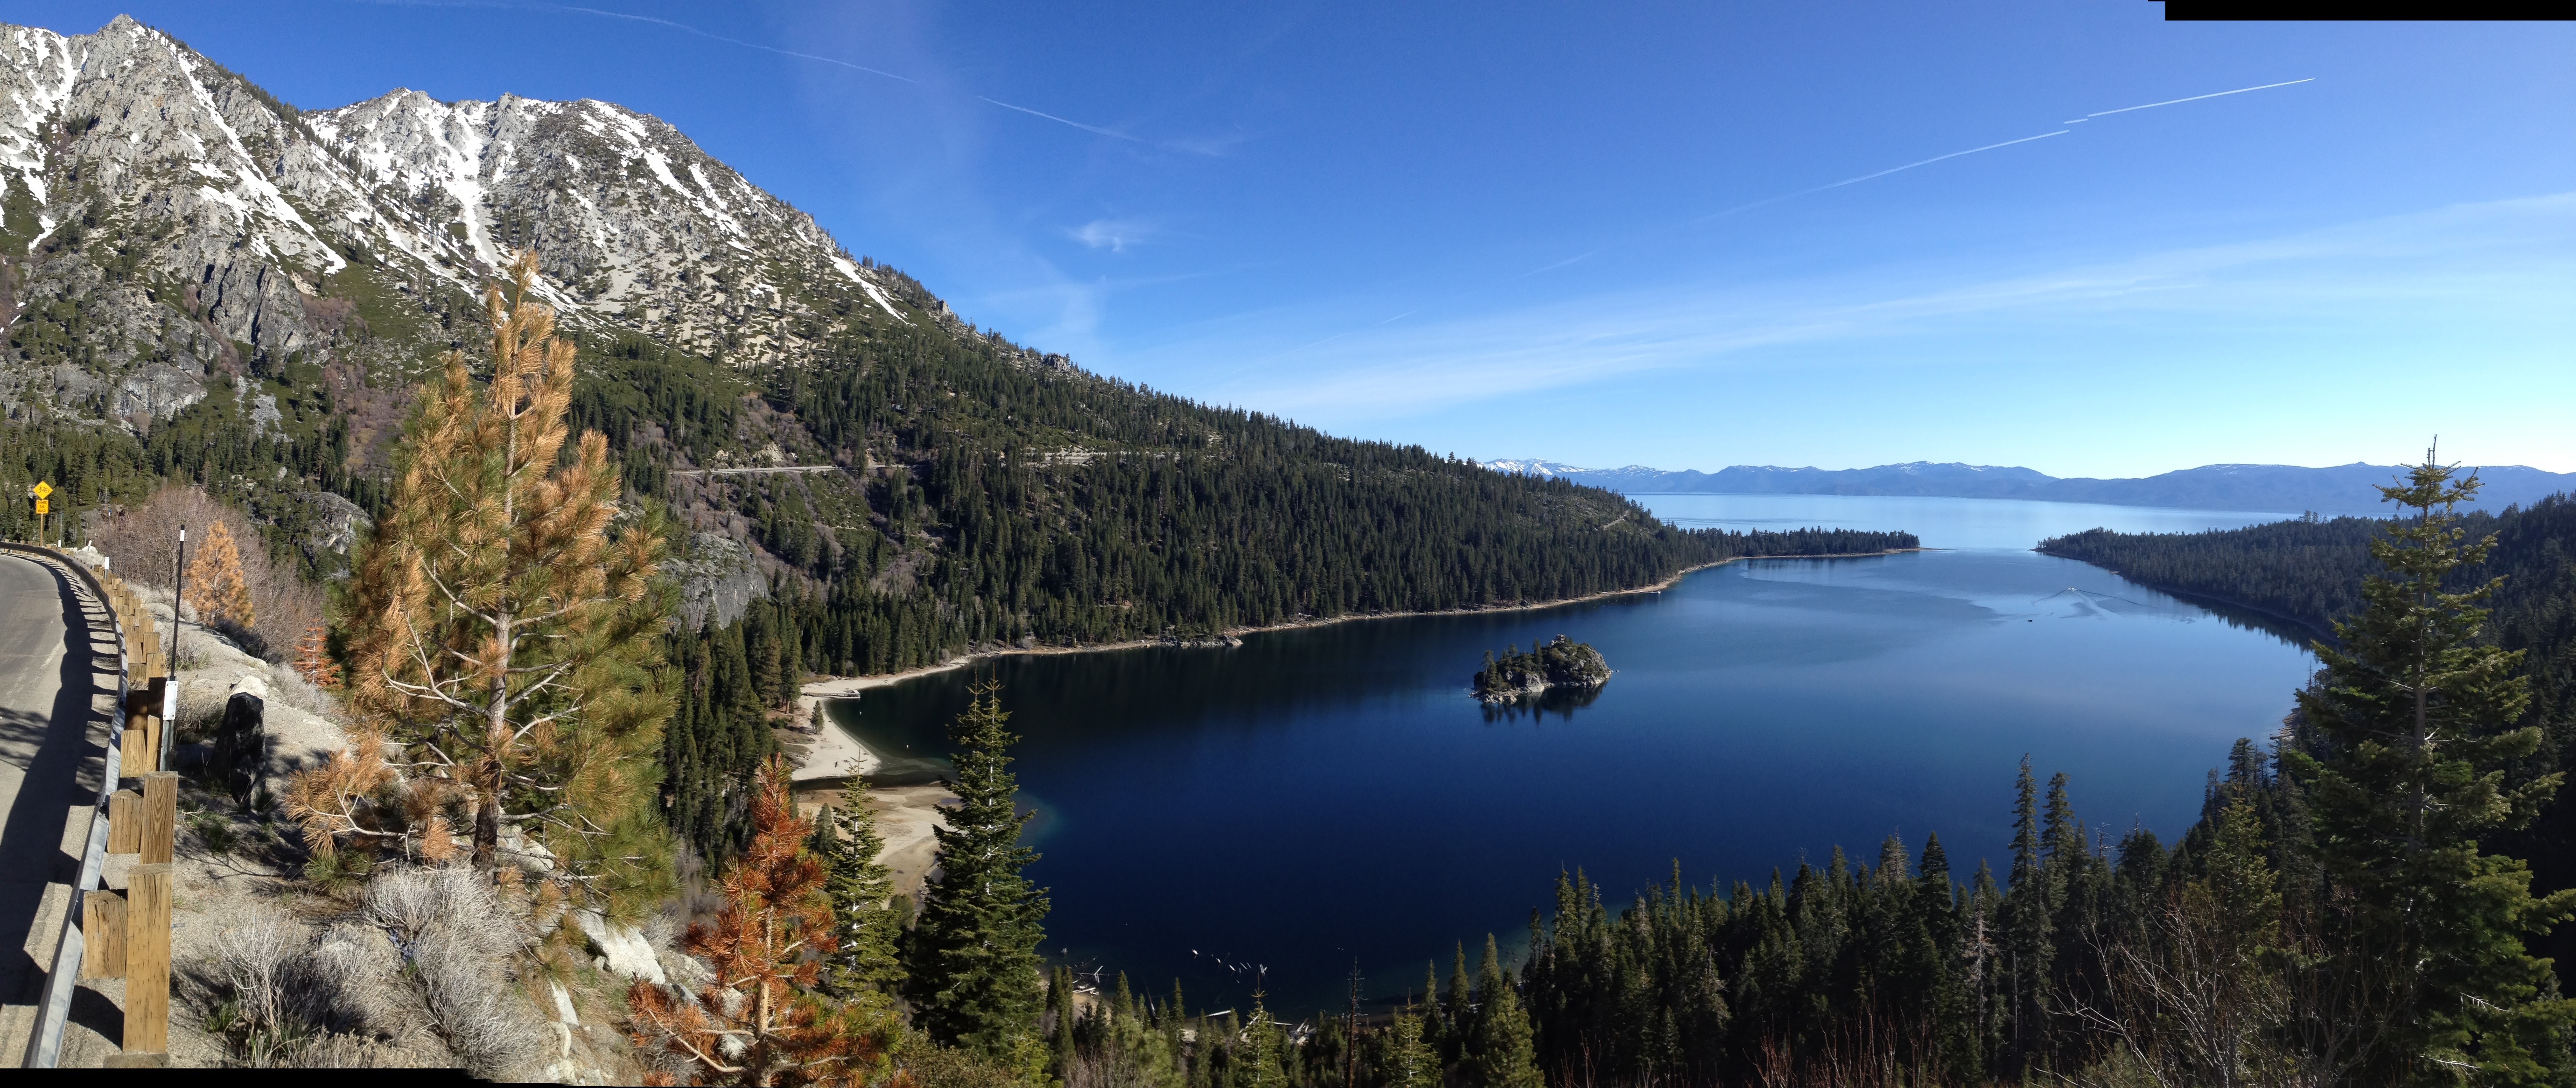 Emerald Bay, Lake Tahoe, CA yesterday am.  photo:  miles clark/snowbrains